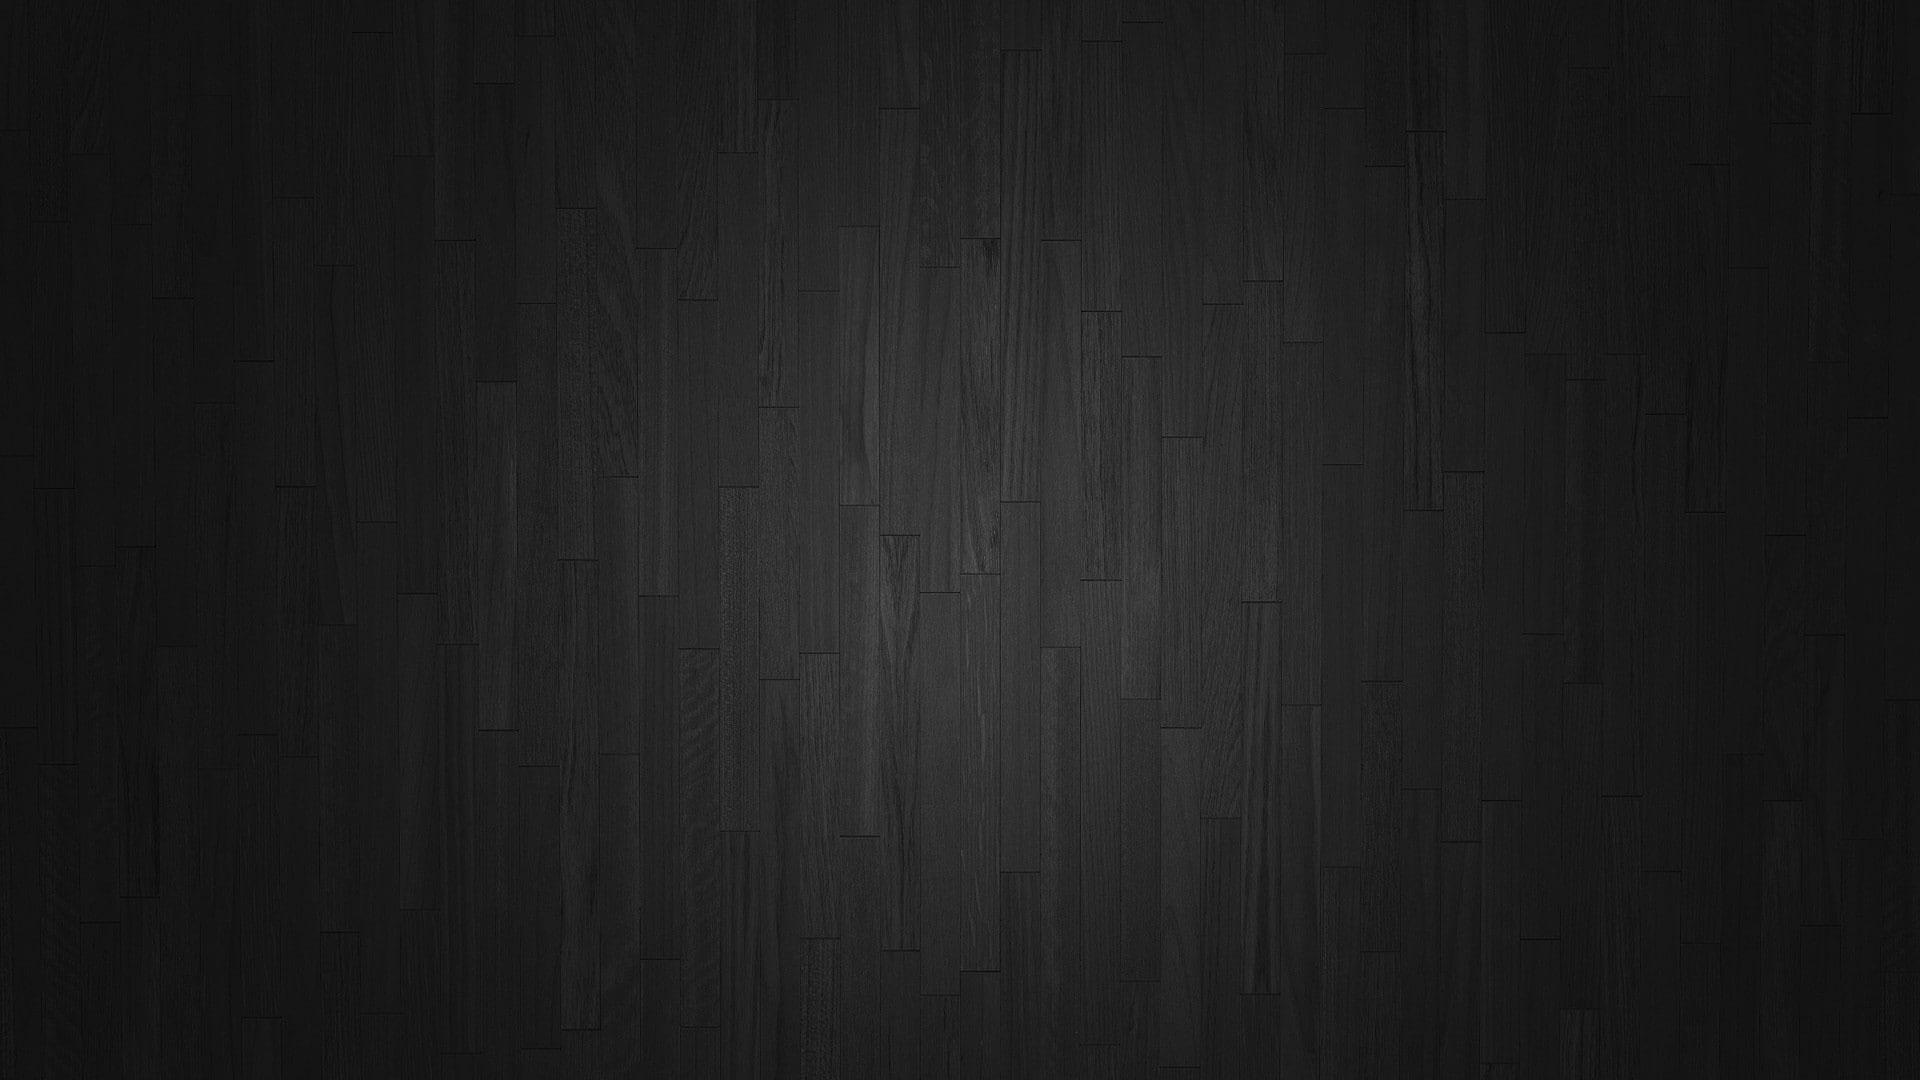 Minimalism wood panels wallpaper, texture